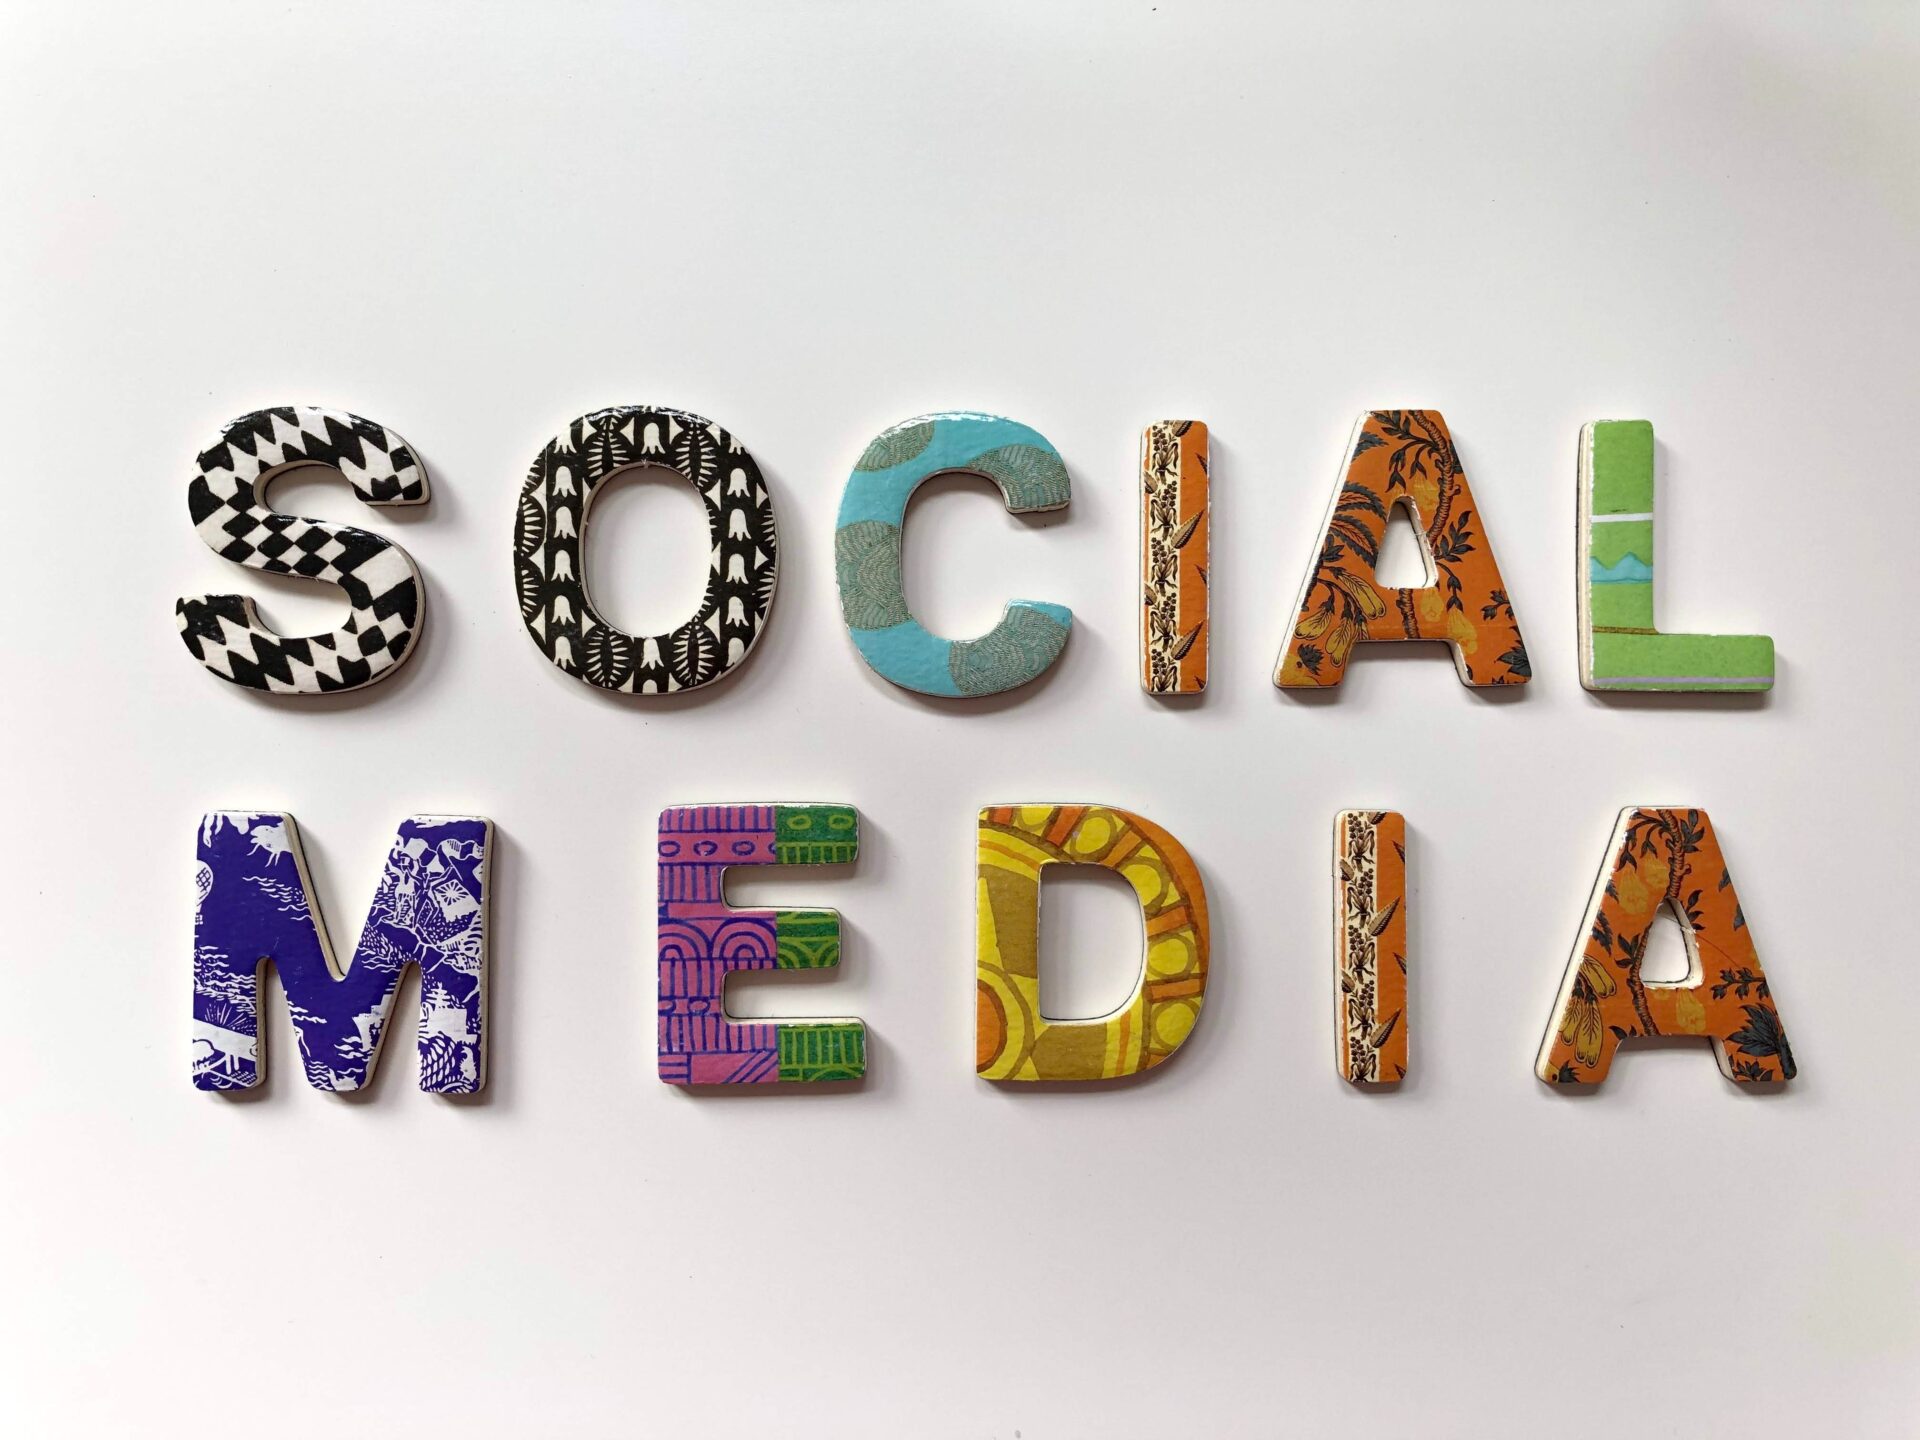 Social media marketing Dubai